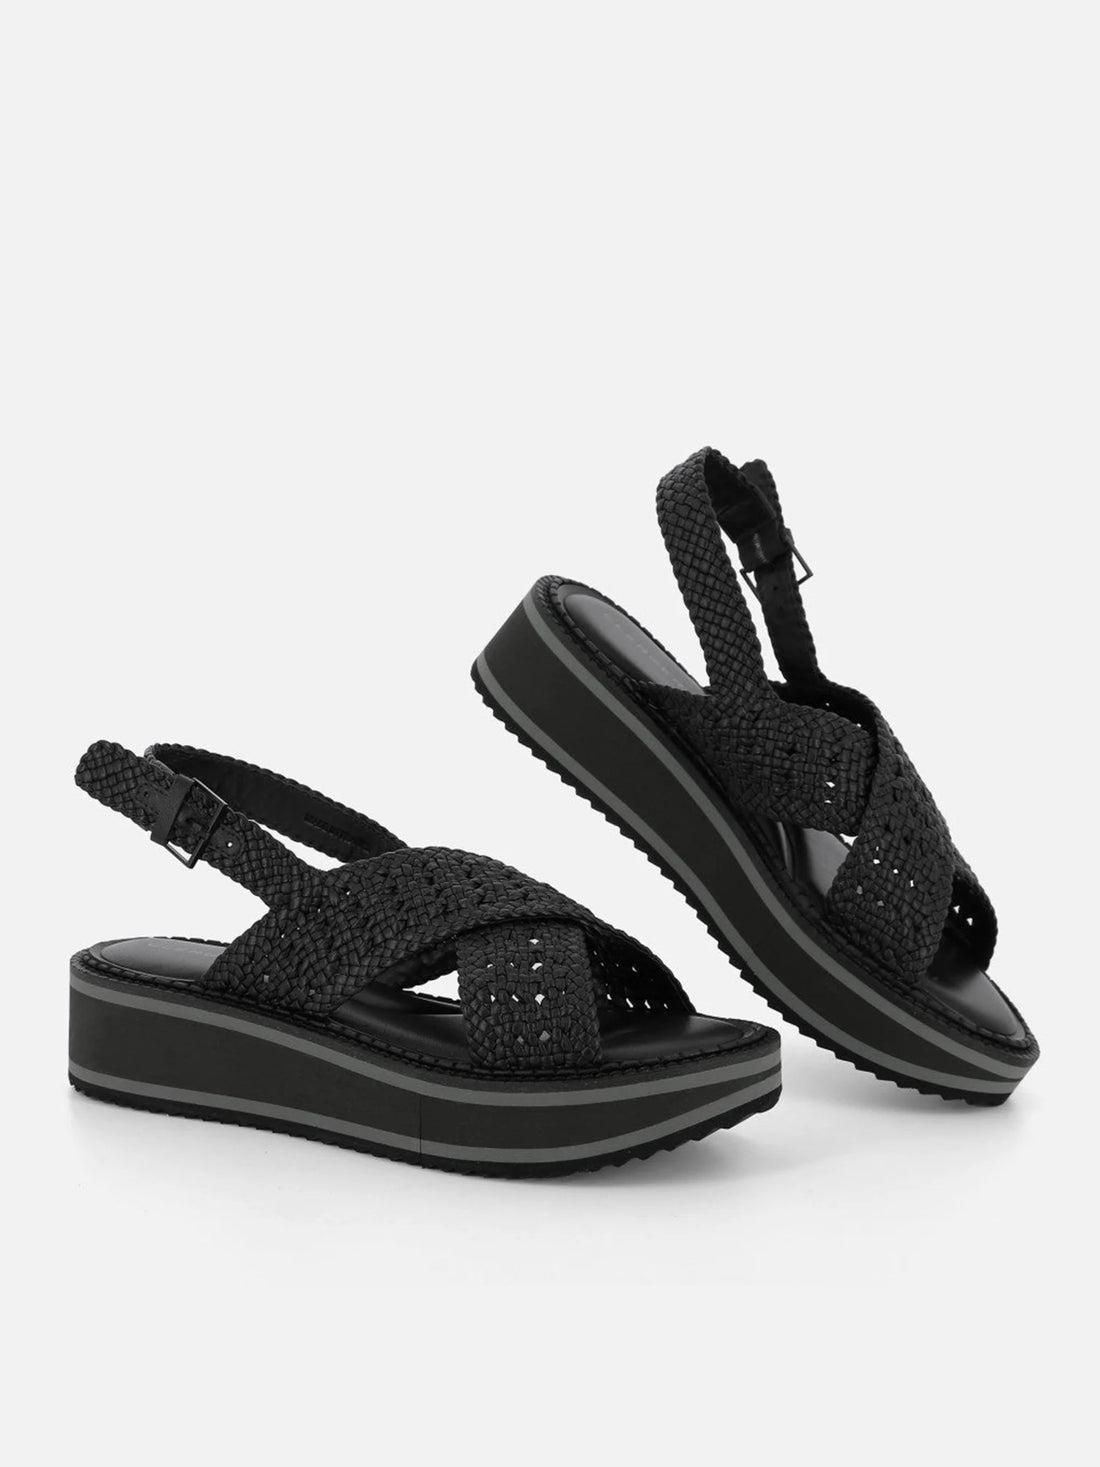 FRITZ sandals, nappa black || OUTLET